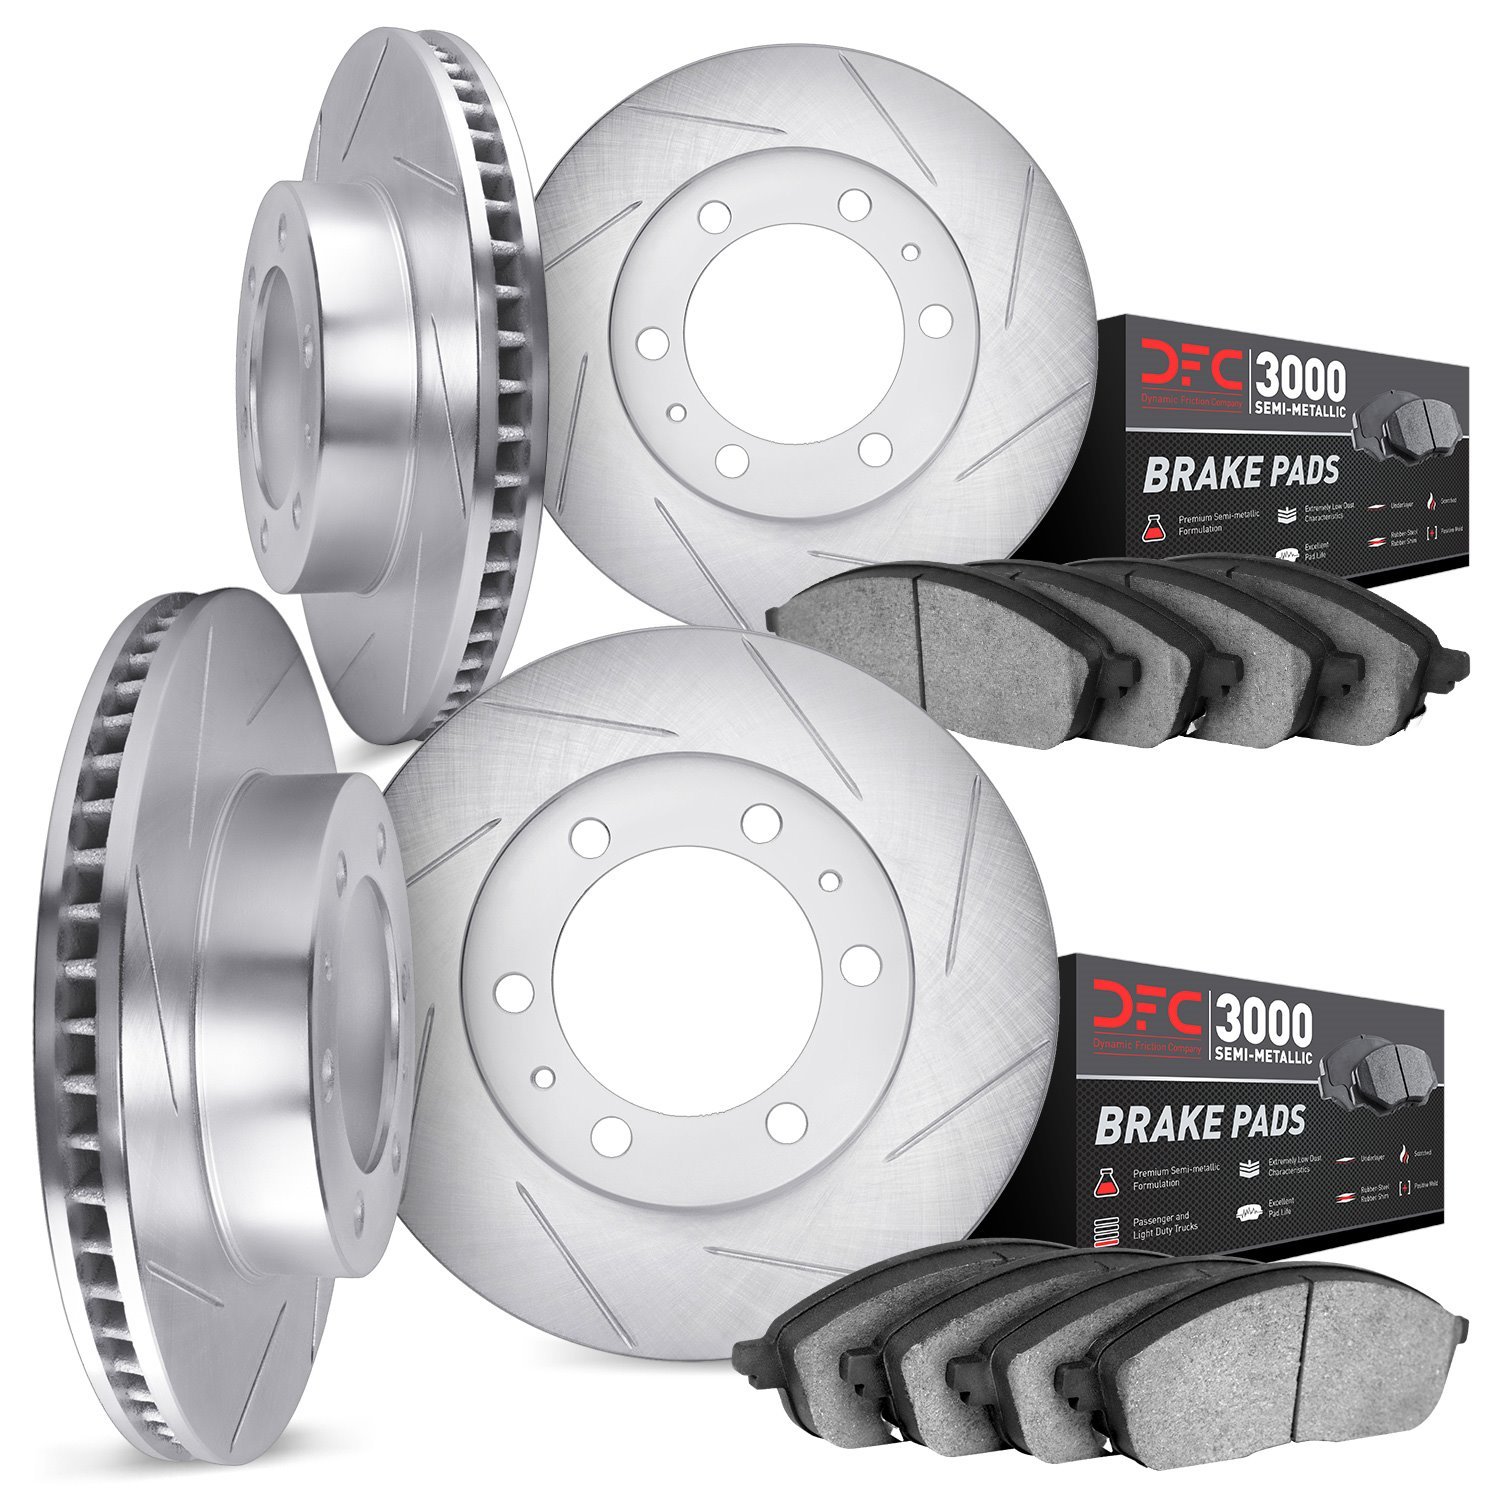 5114-76069 Slotted Brake Rotors with 3000-Series Semi-Metallic Brake Pads Kit & Hardware [Silver], Fits Select Lexus/Toyota/Scio